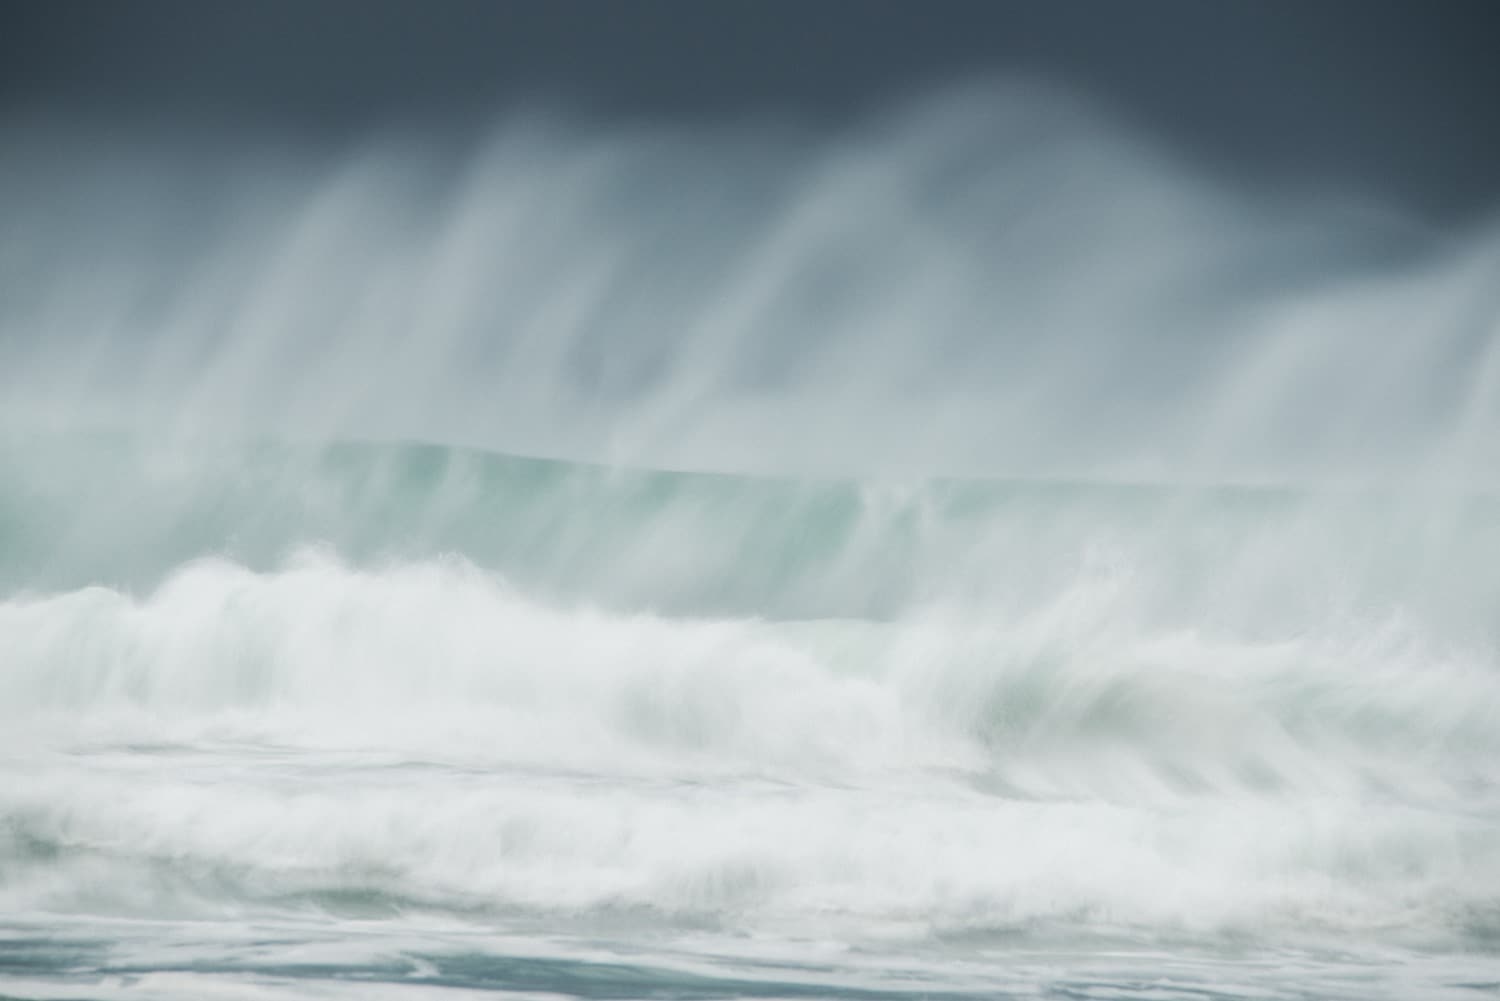 wave photograph on saligo bay on the isle of islay 